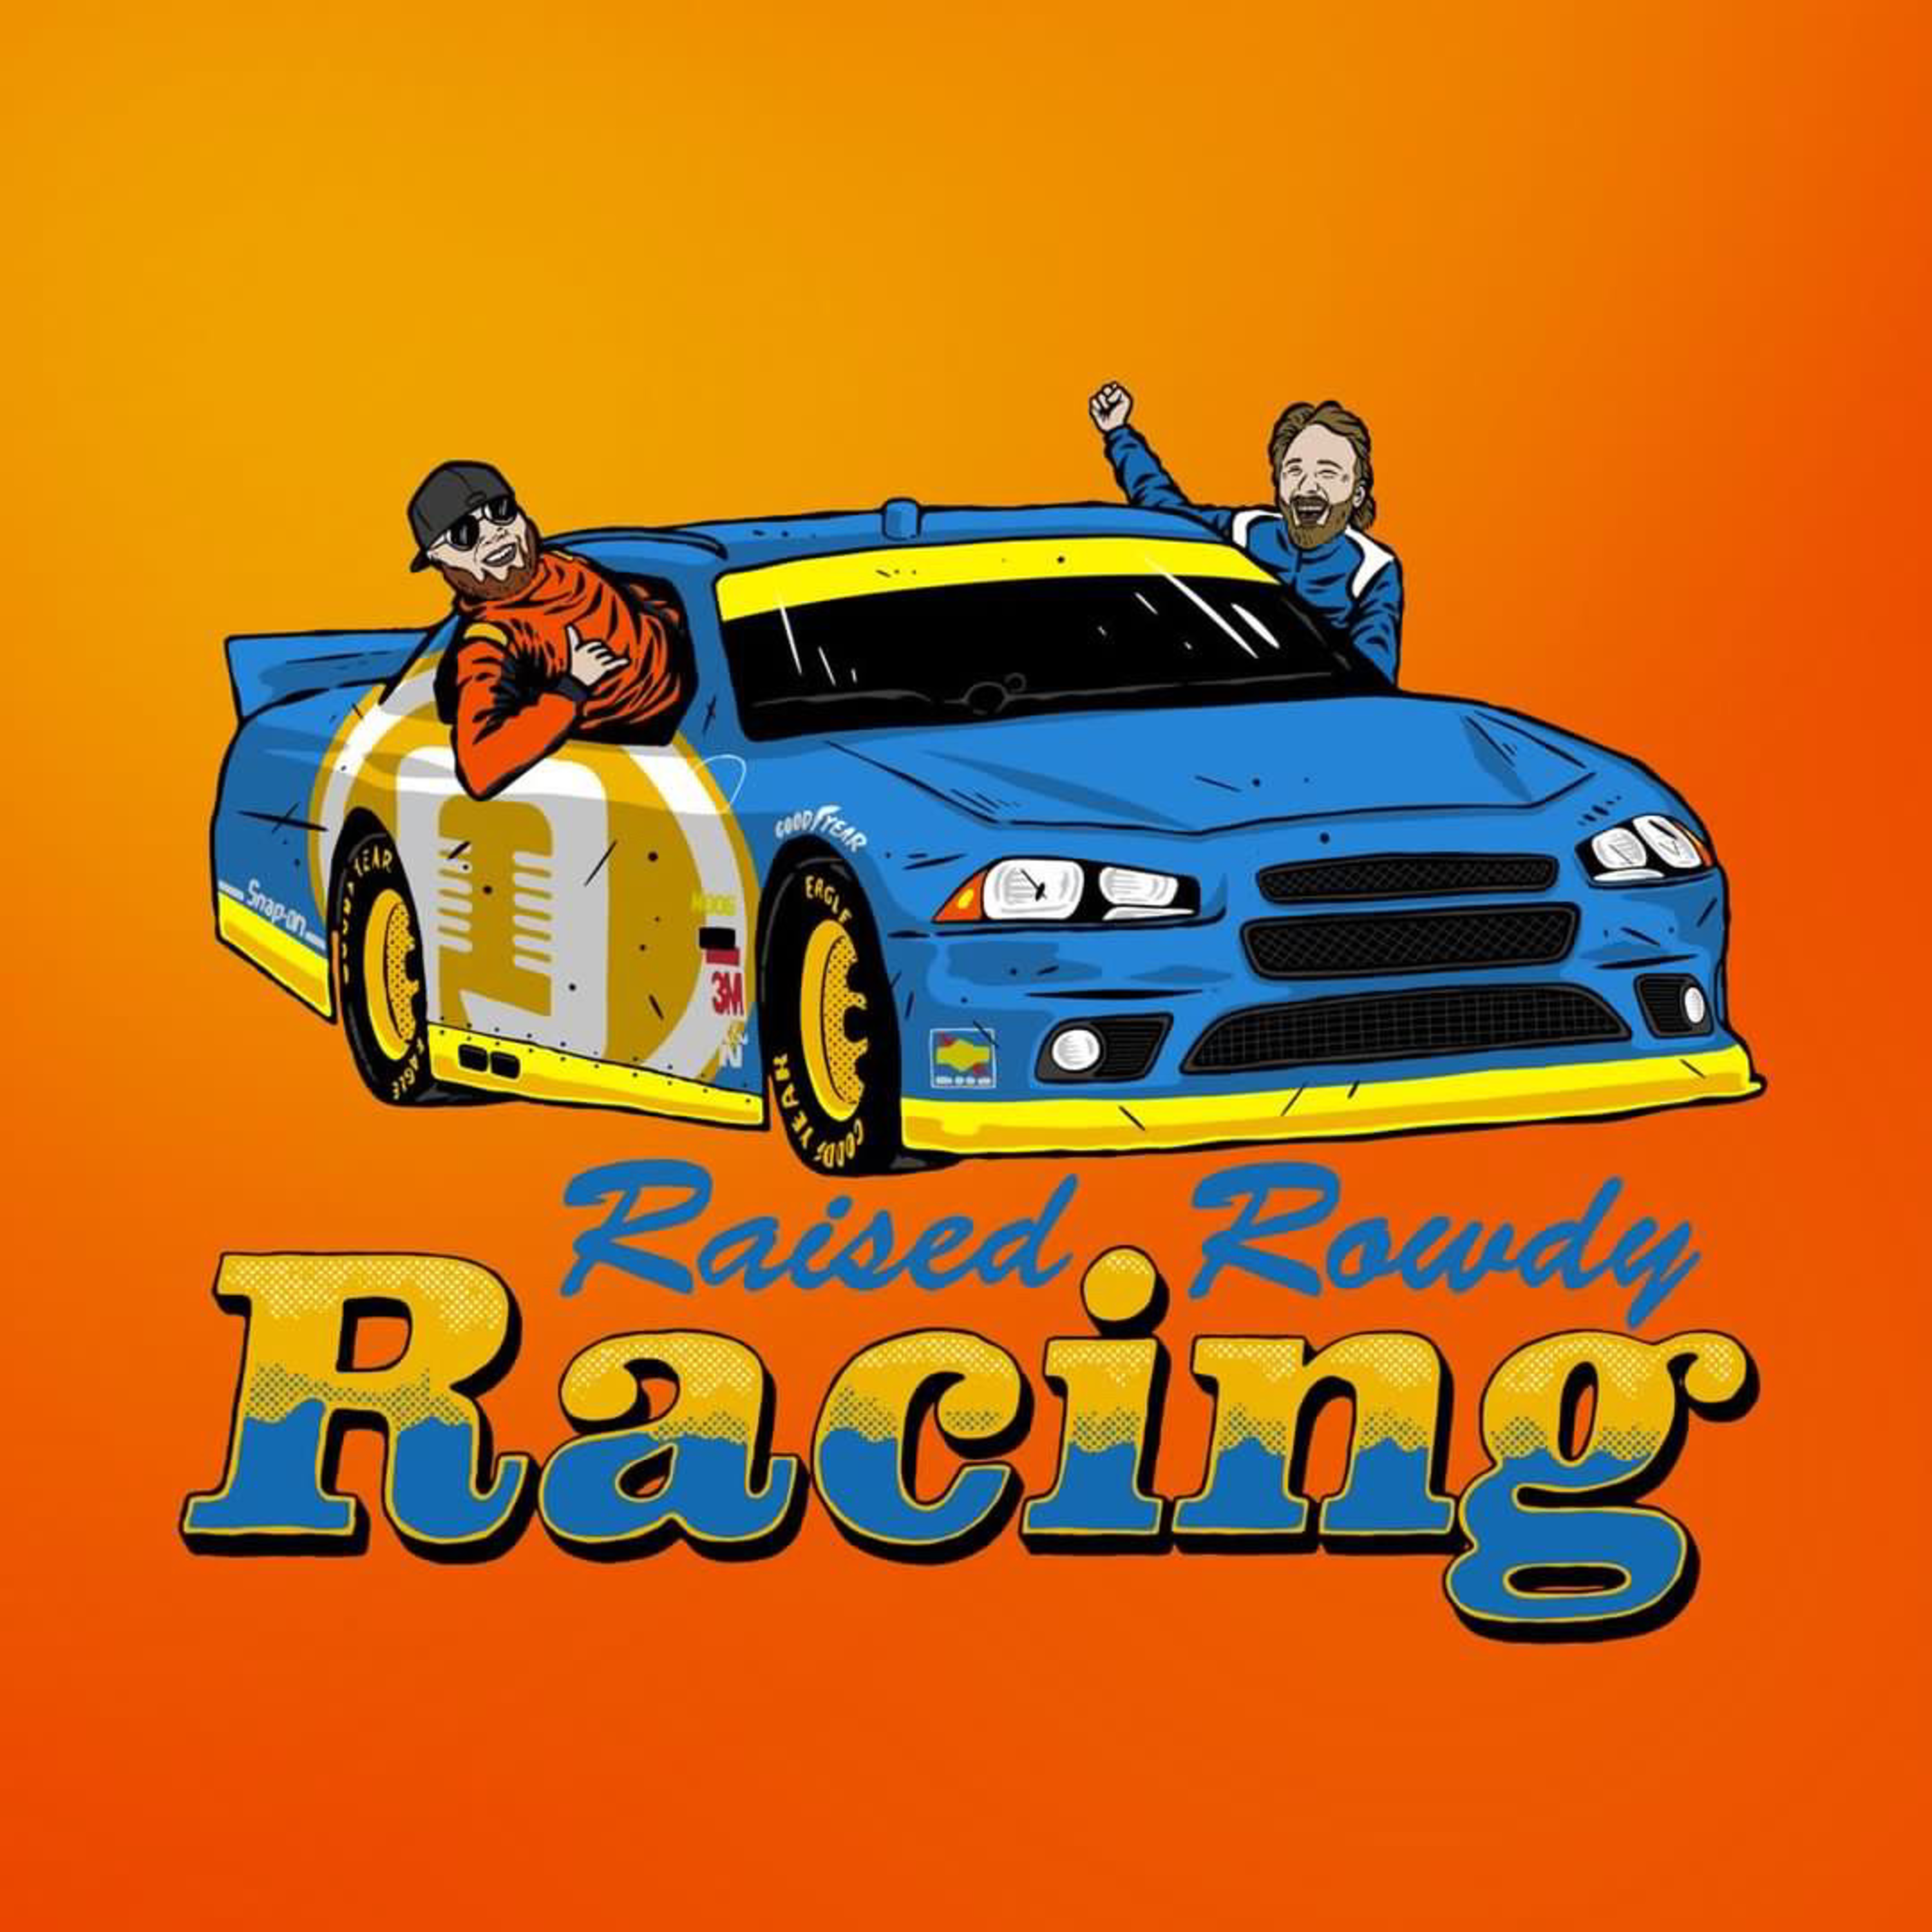 Raised Rowdy Racing